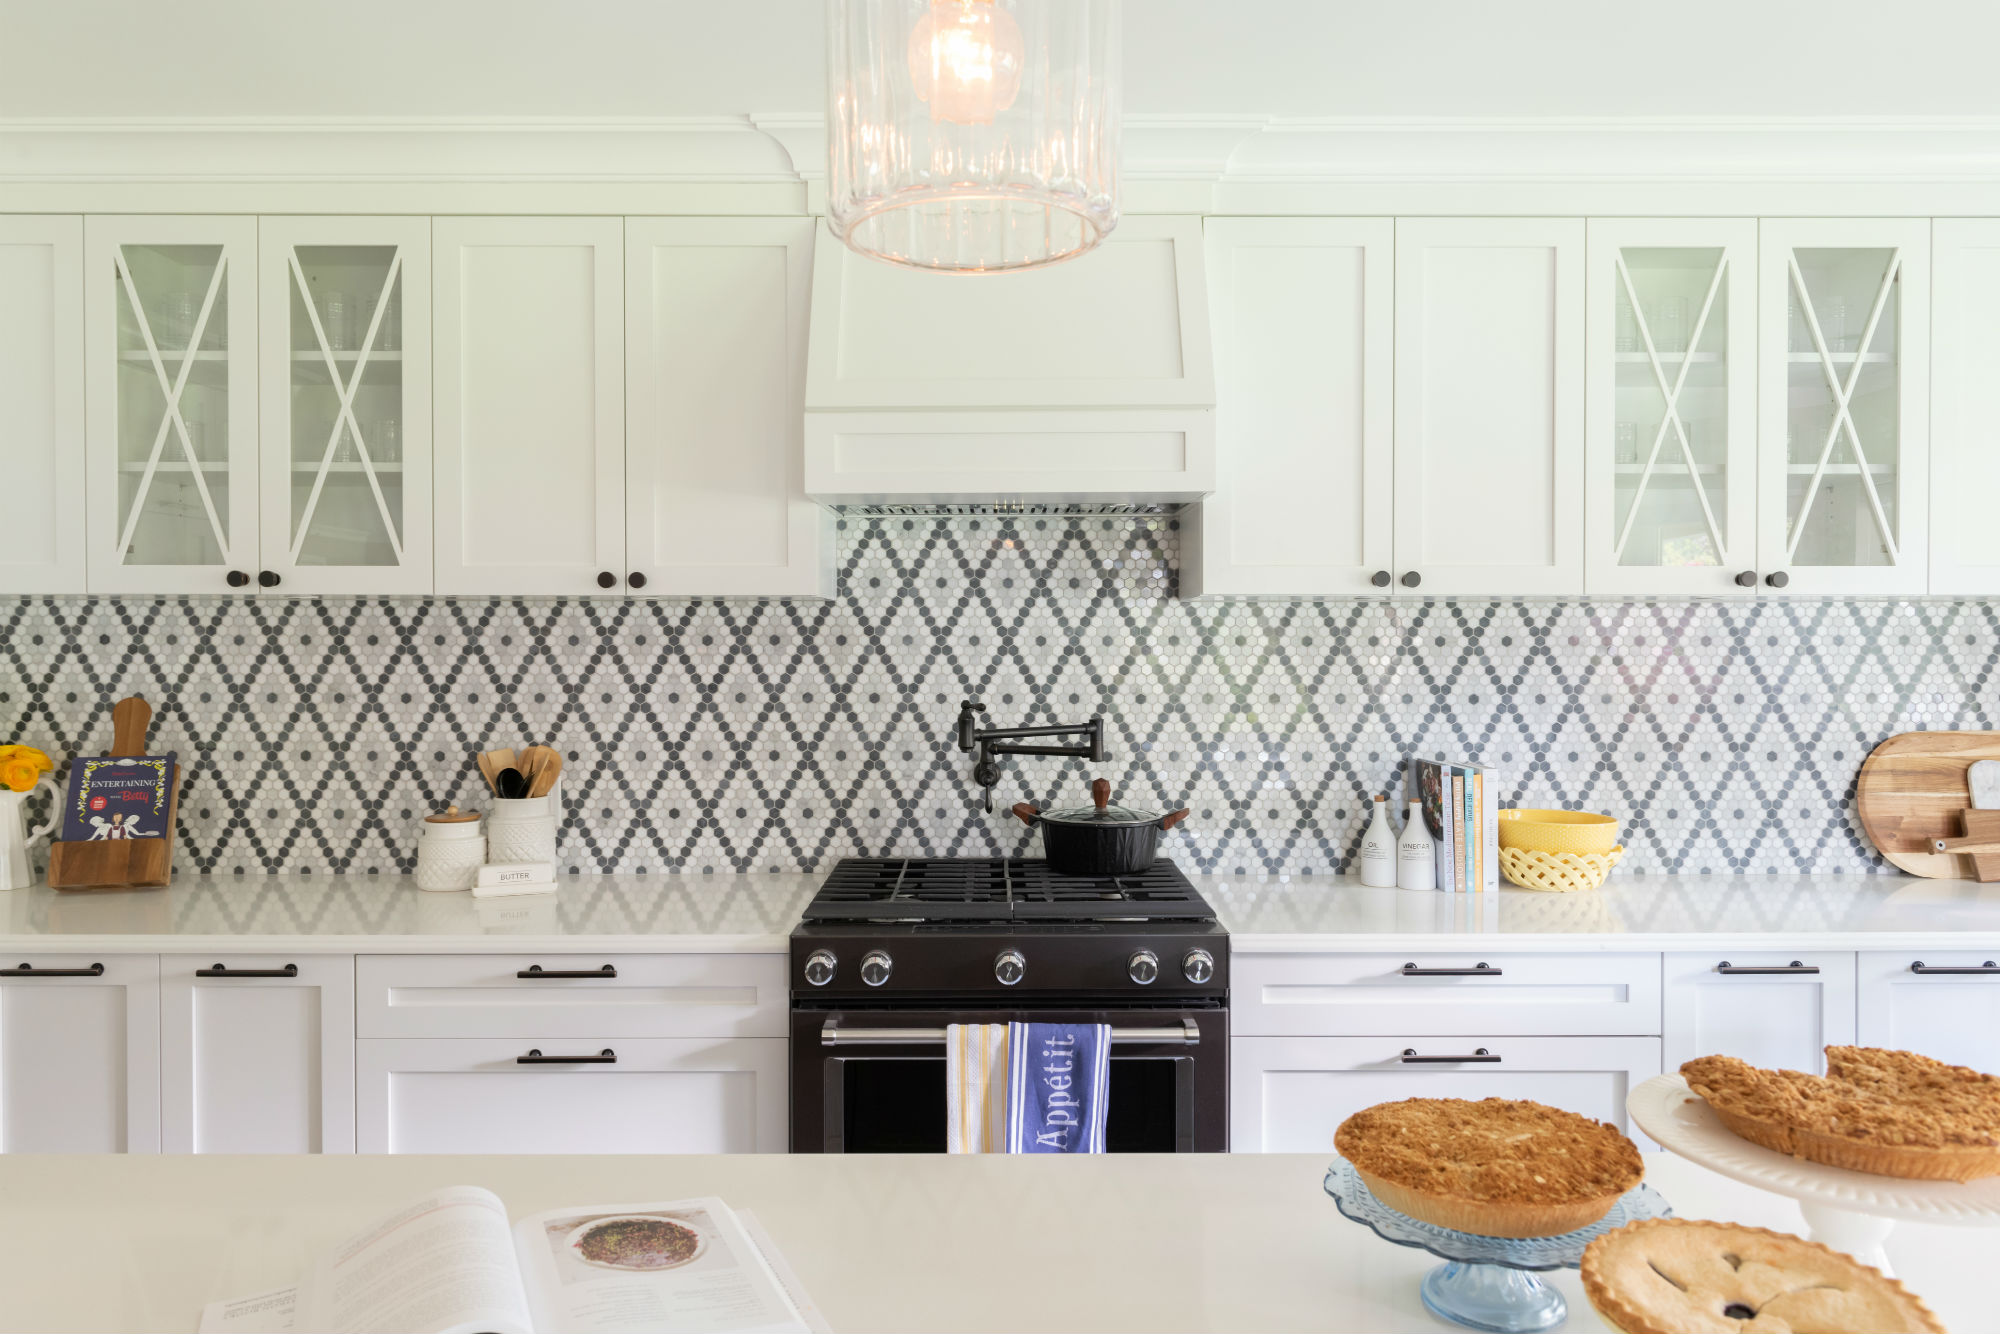 Kitchen with intricate diamond design penny tile backsplash